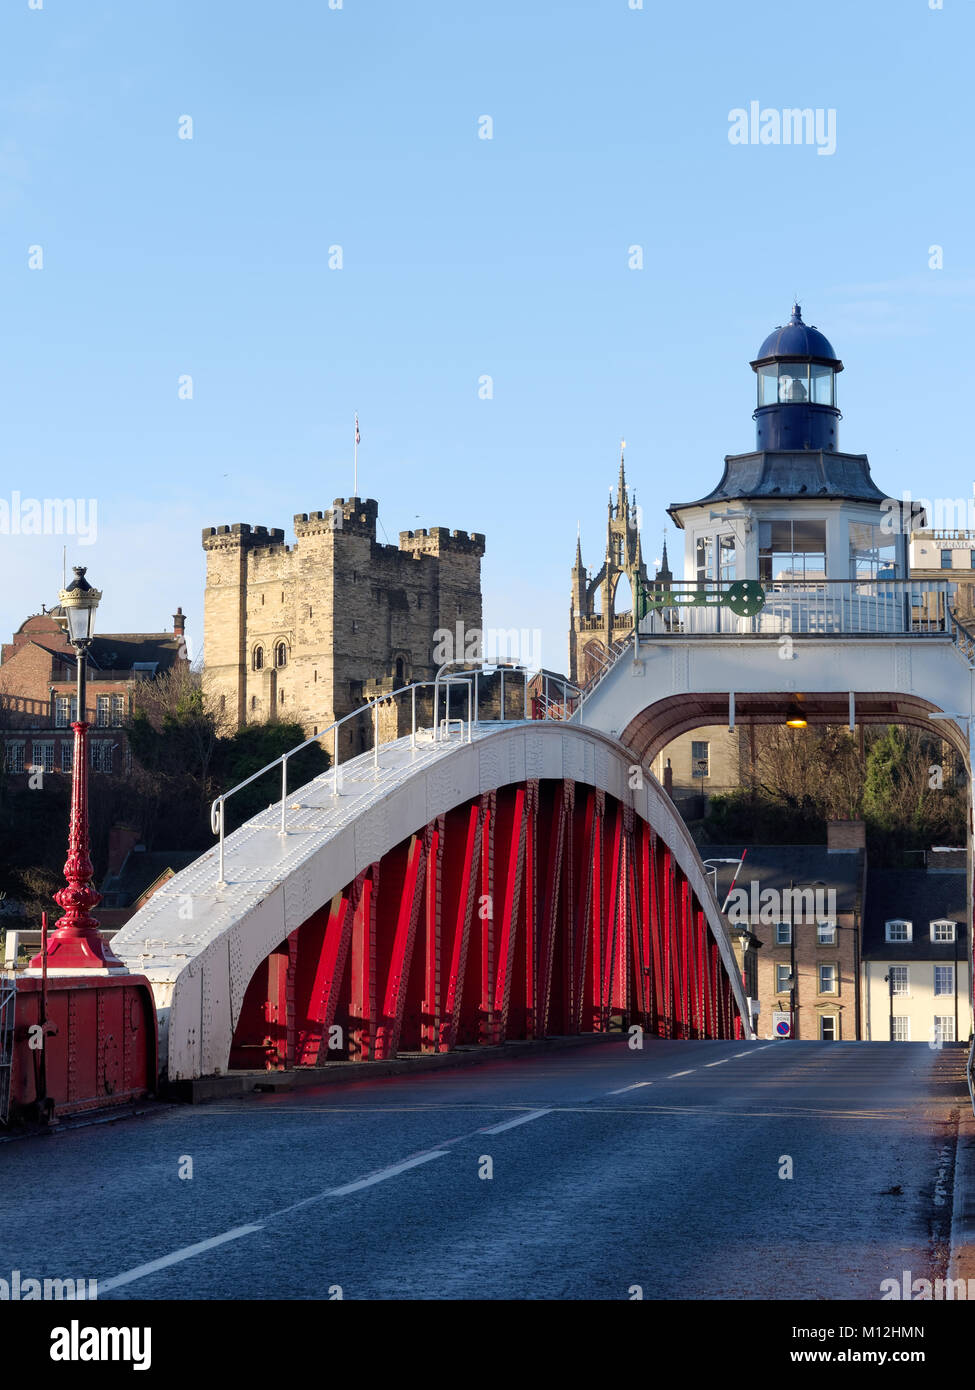 NEWCASTLE UPON TYNE, TYNE AND WEAR/UK - JANUARY 20 : View of the Swing Bridge in Newcastle upon Tyne, Tyne and Wear on January 20, 2018 Stock Photo